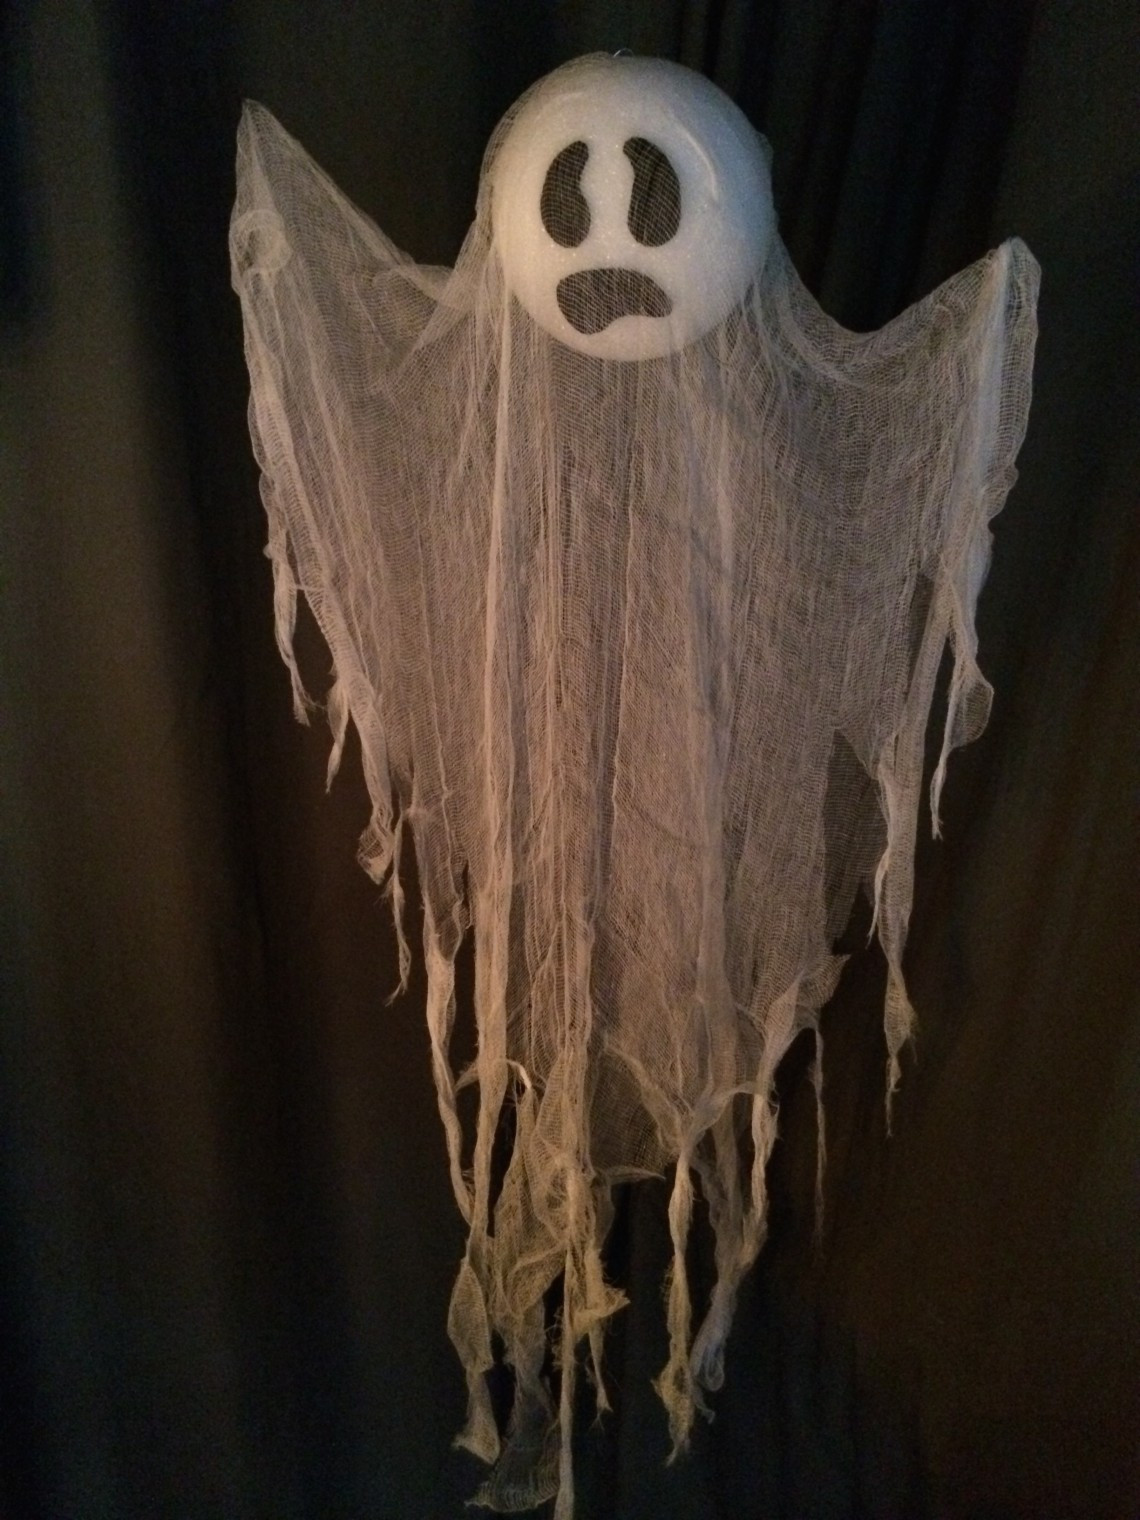 DIY Halloween Ghost Decorations
 5 Easy Creepy Yet Classy Halloween Party Decorations [on a